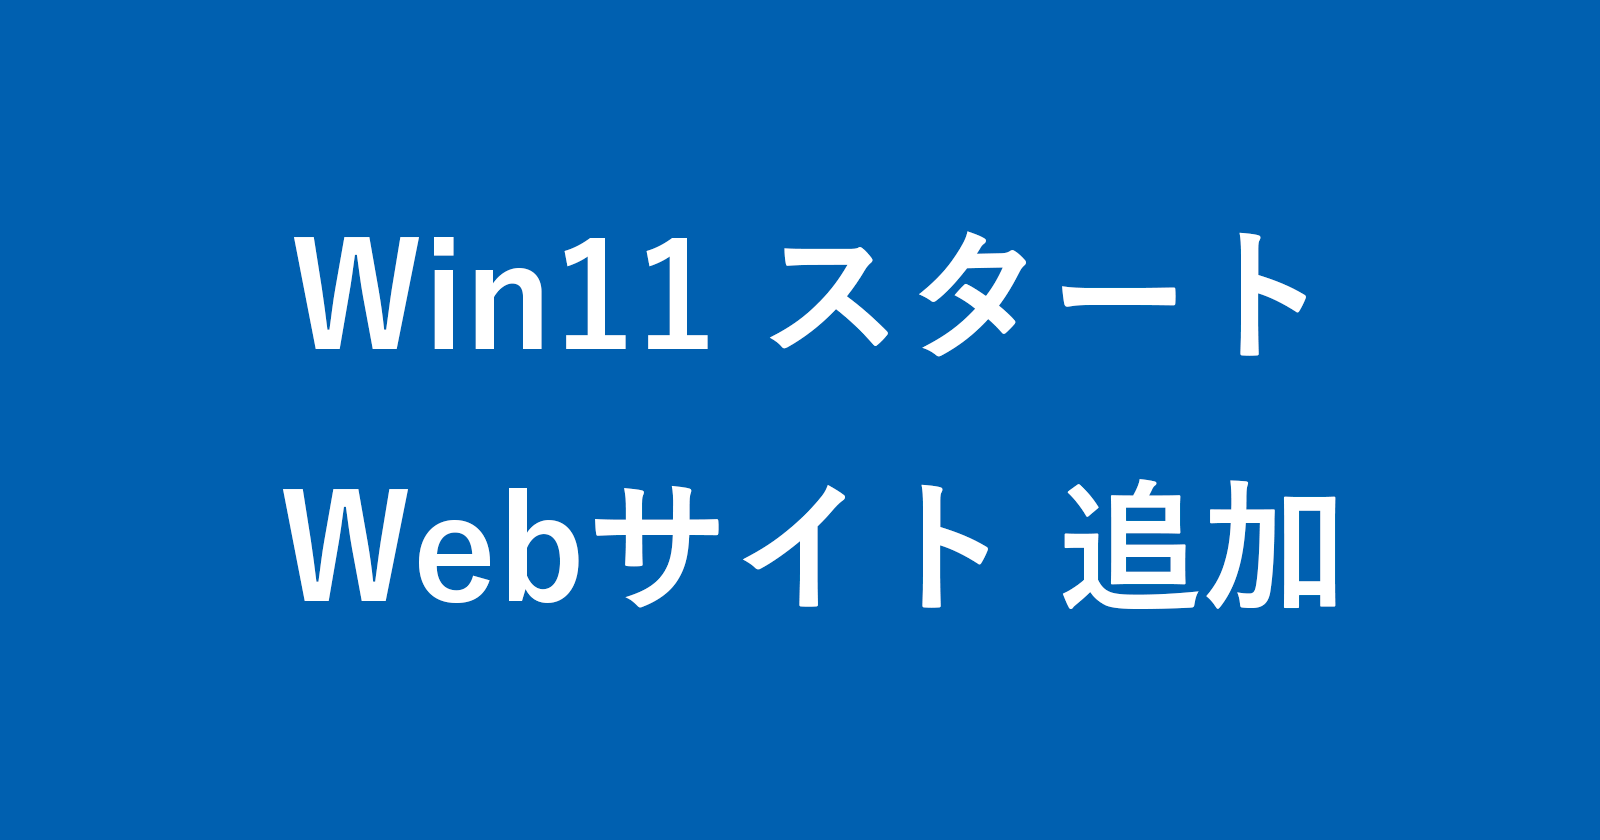 windows 11 pin web